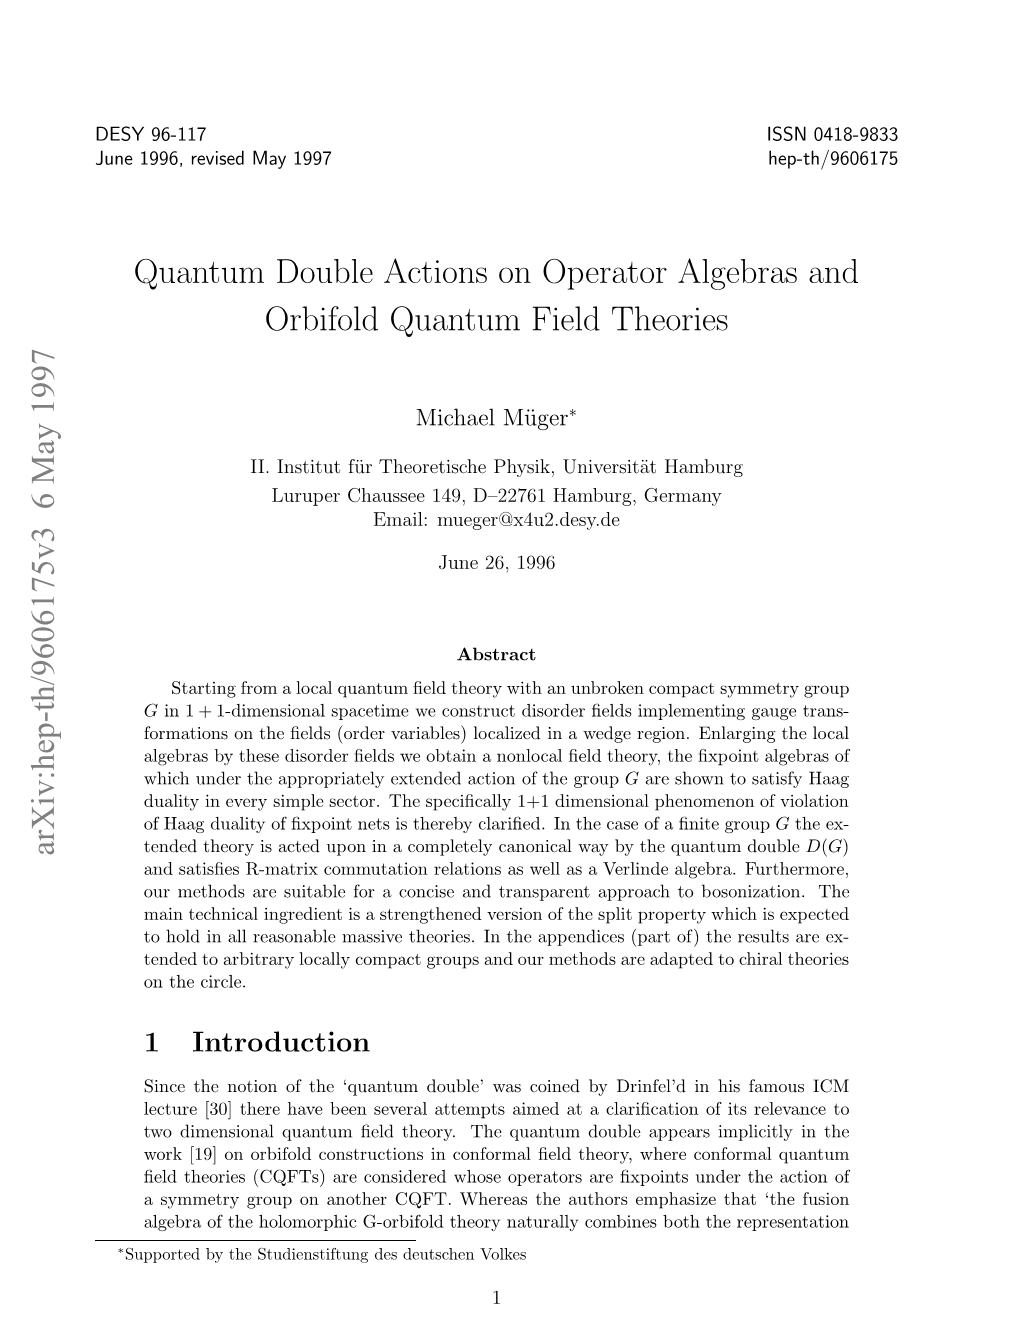 Quantum Double Actions on Operator Algebras and Orbifold Quantum